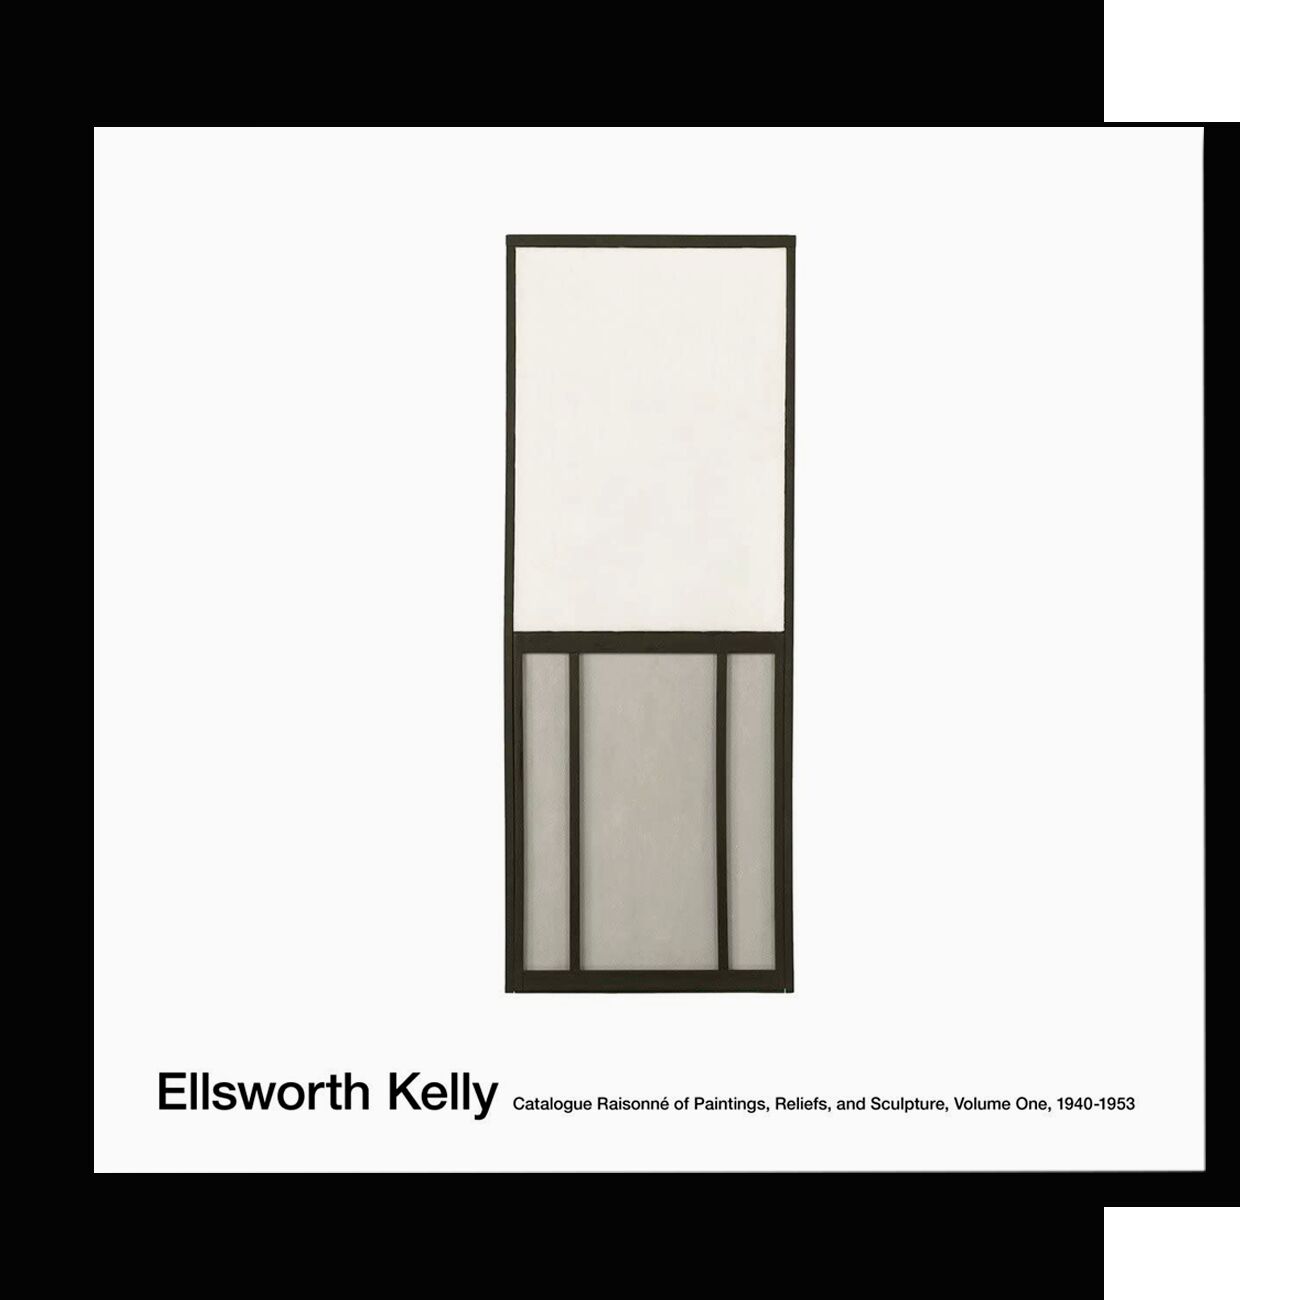 Ellsworth Kelly: Catalogue Raisonne of Paintings, Reliefs, and Sculpture, 1940-1953